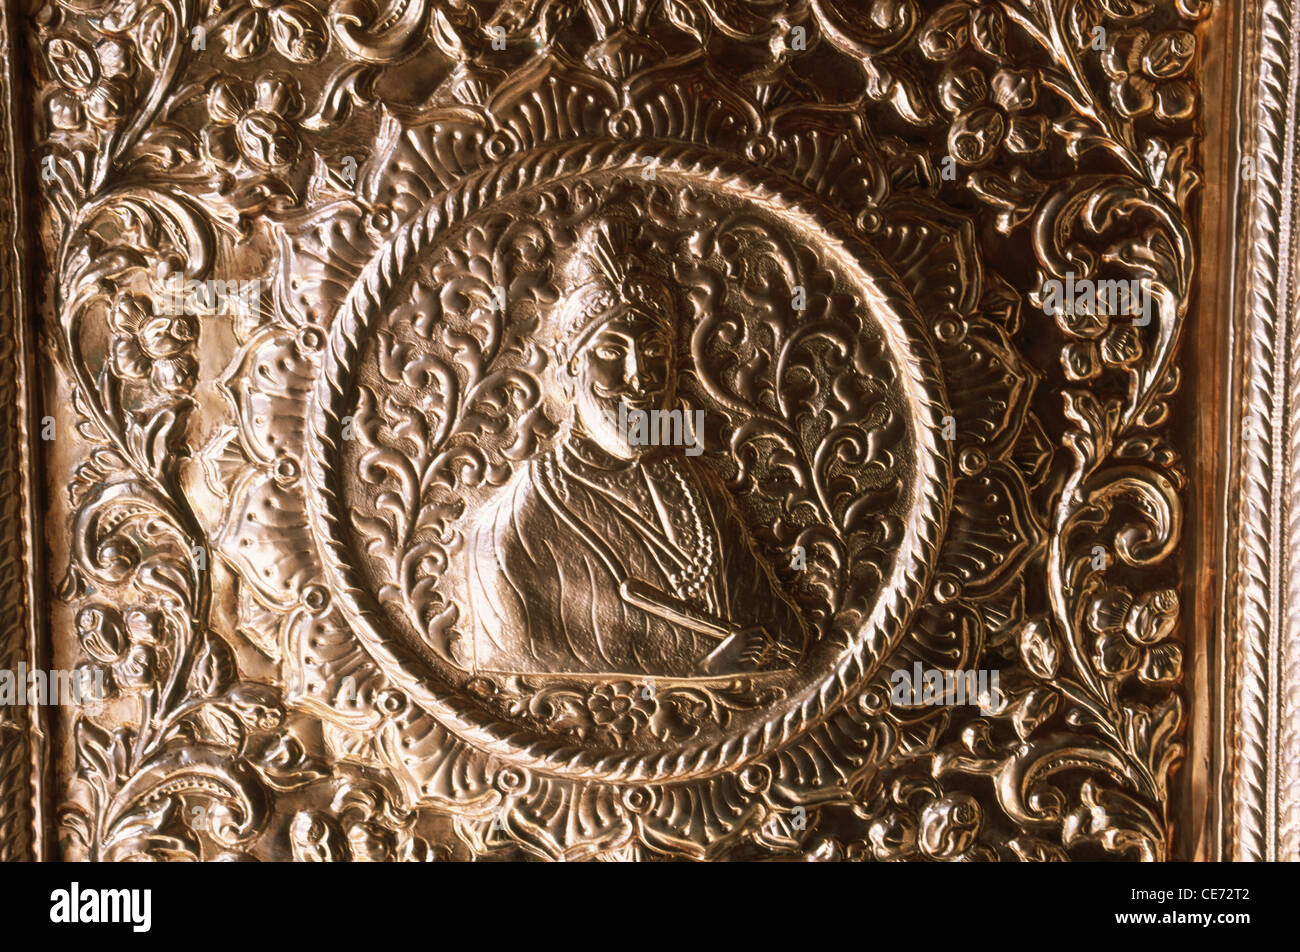 Il Guru govind singh disegno in rilievo sulla piastra di argento sulla porta ; Sachkhand Gurudwarasaheb Gurudwara sahib ; nanded ; india Foto Stock